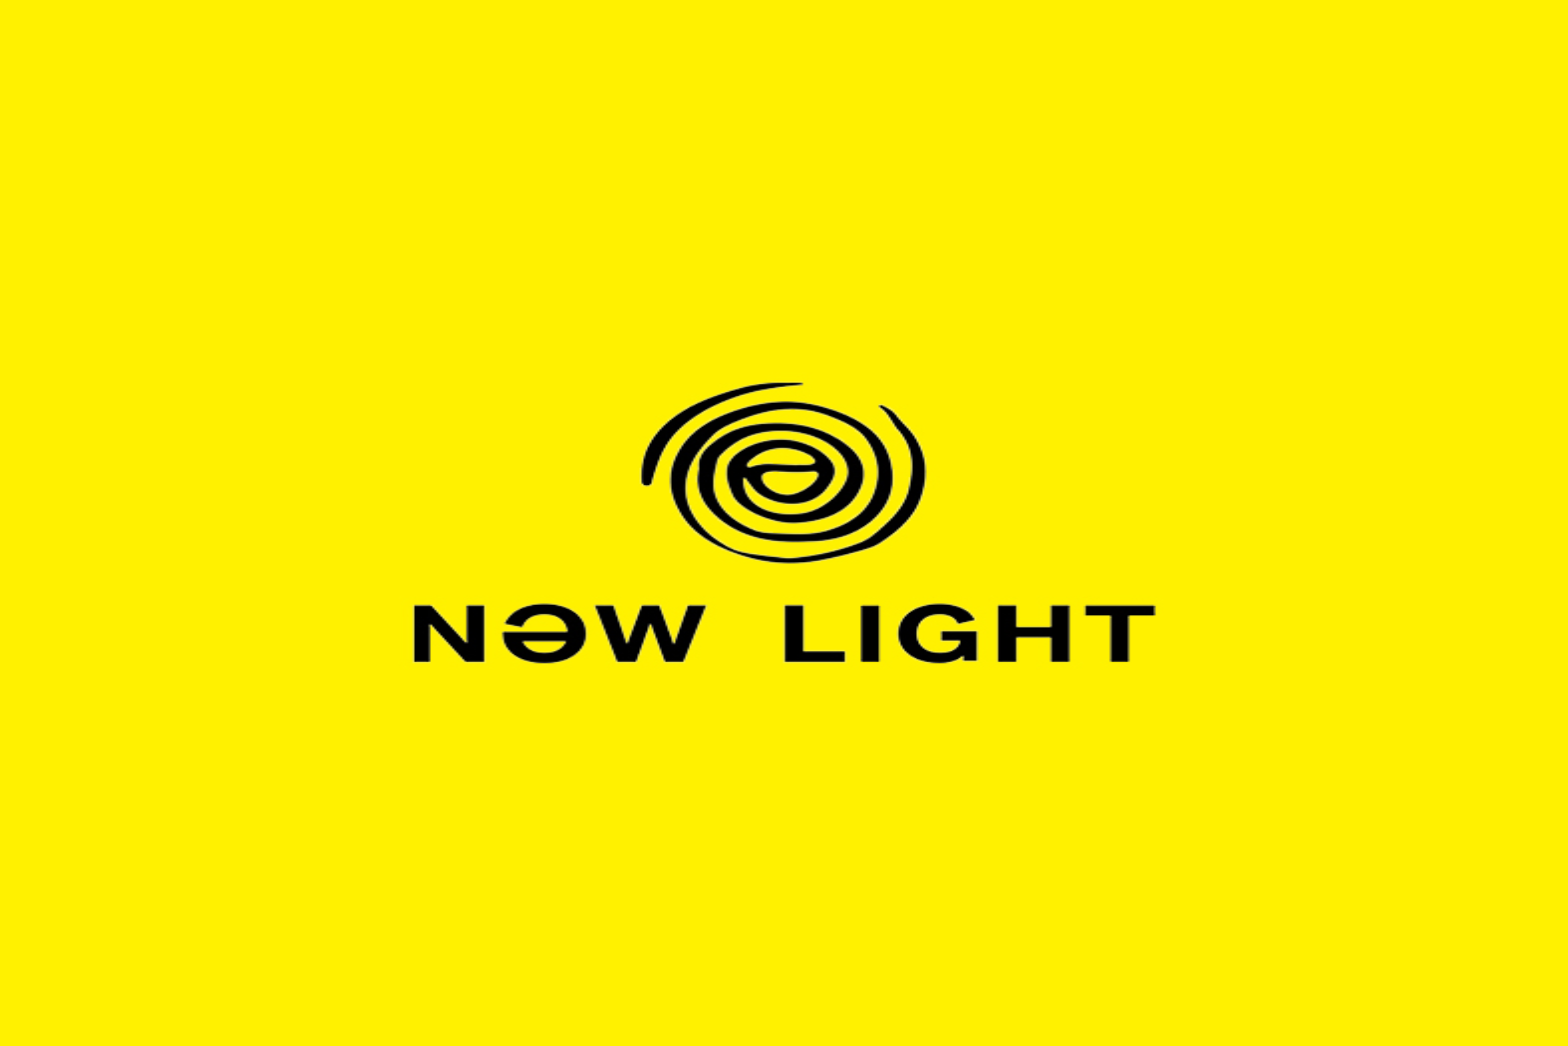 「NƏW LIGHT(ニューライト)」 店名の由来について